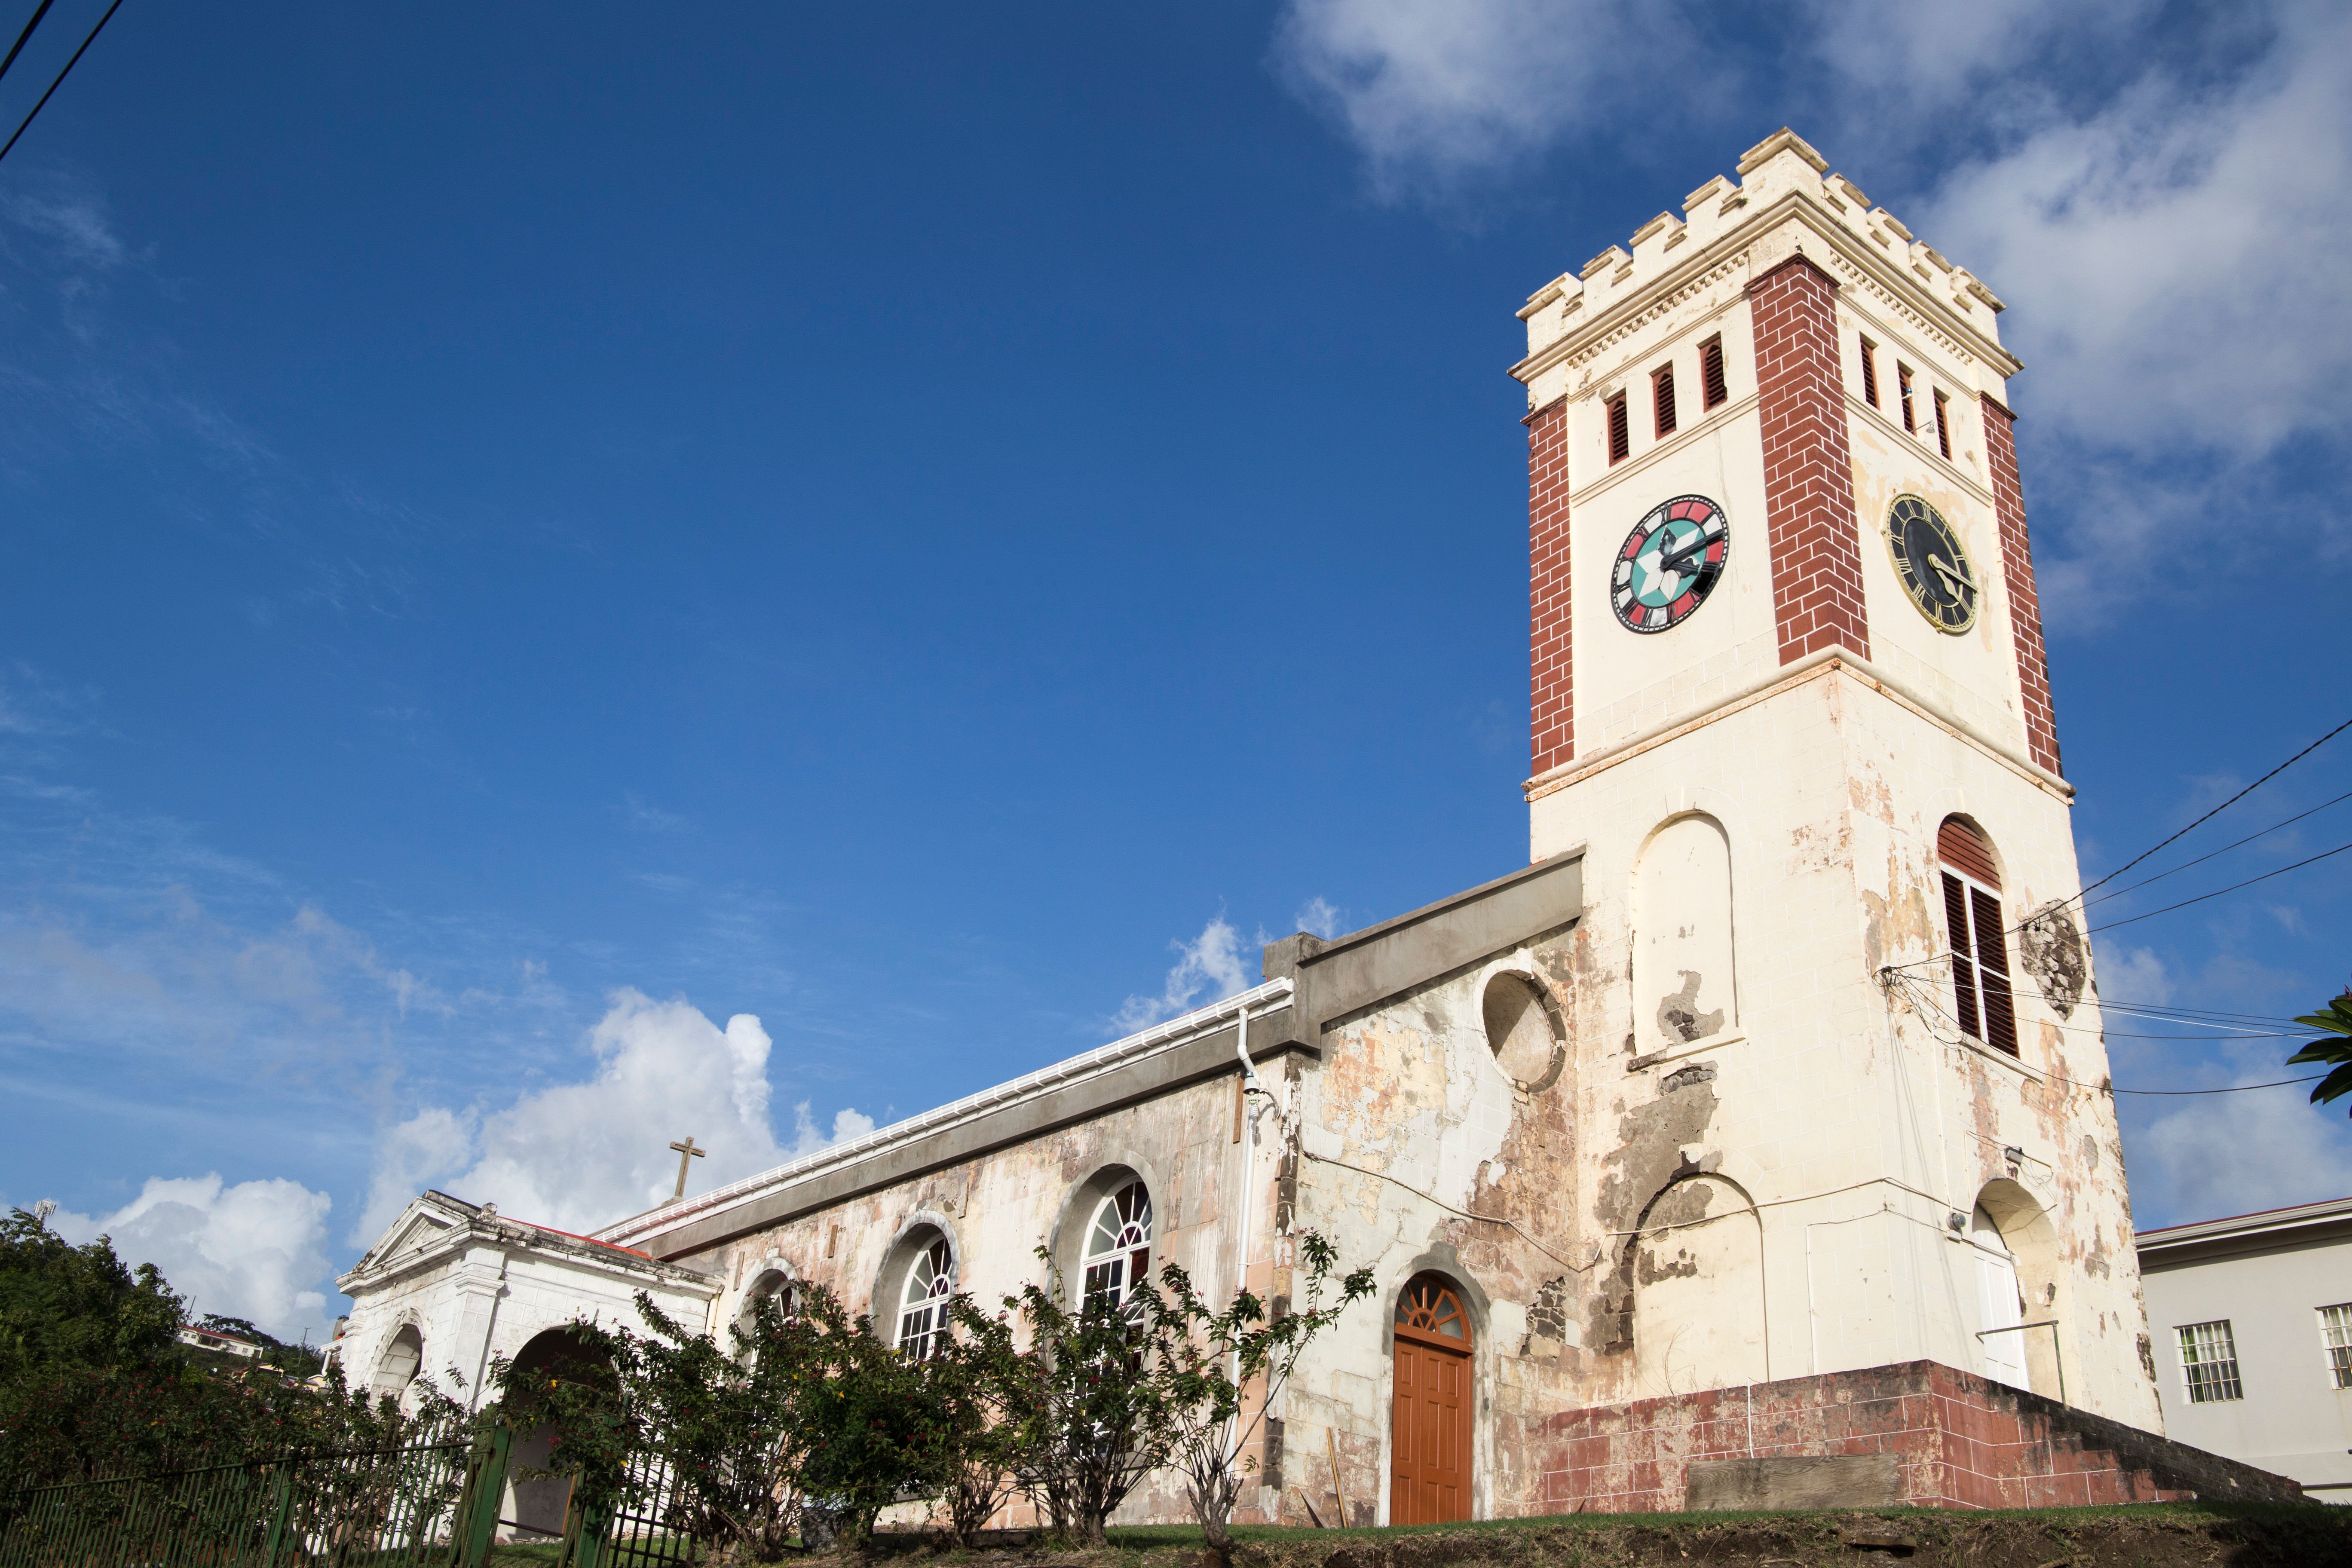 St. George's Grenada